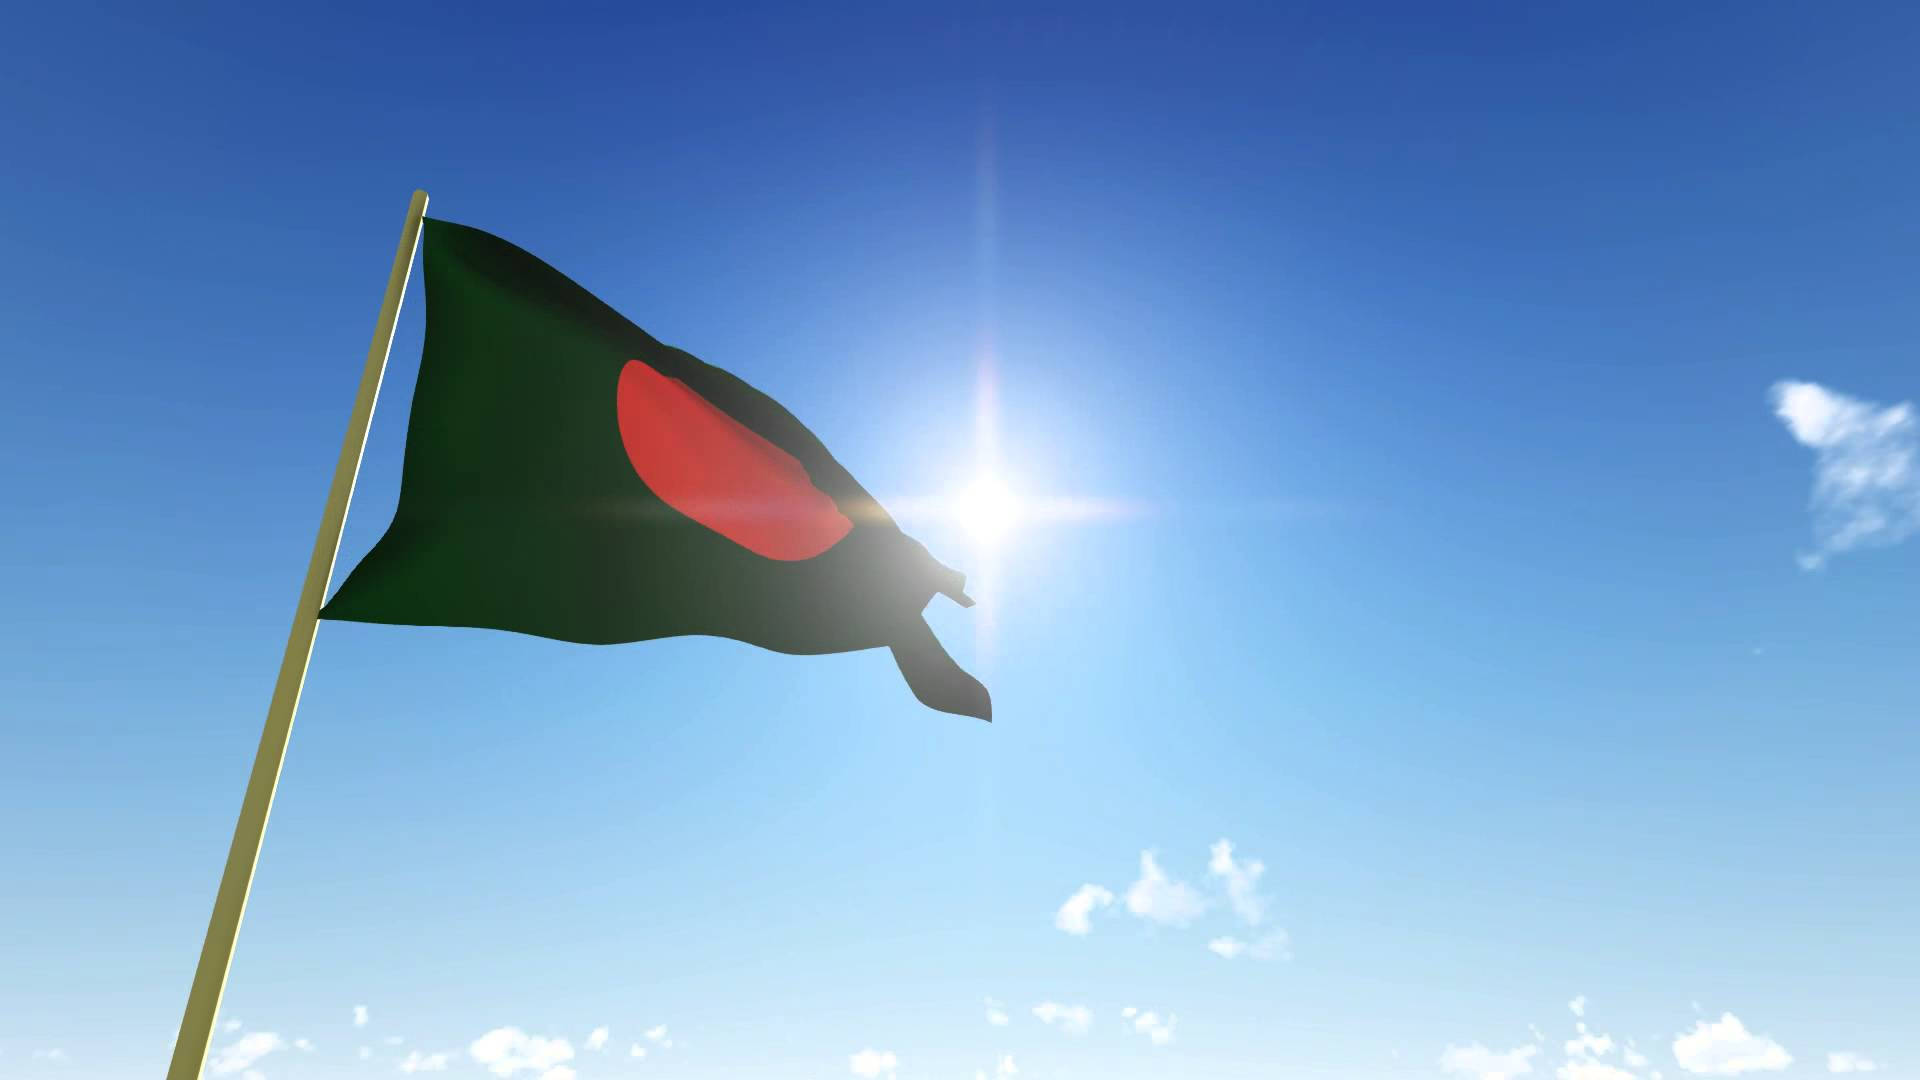 Bangladesh Flag In Flag Pole Background